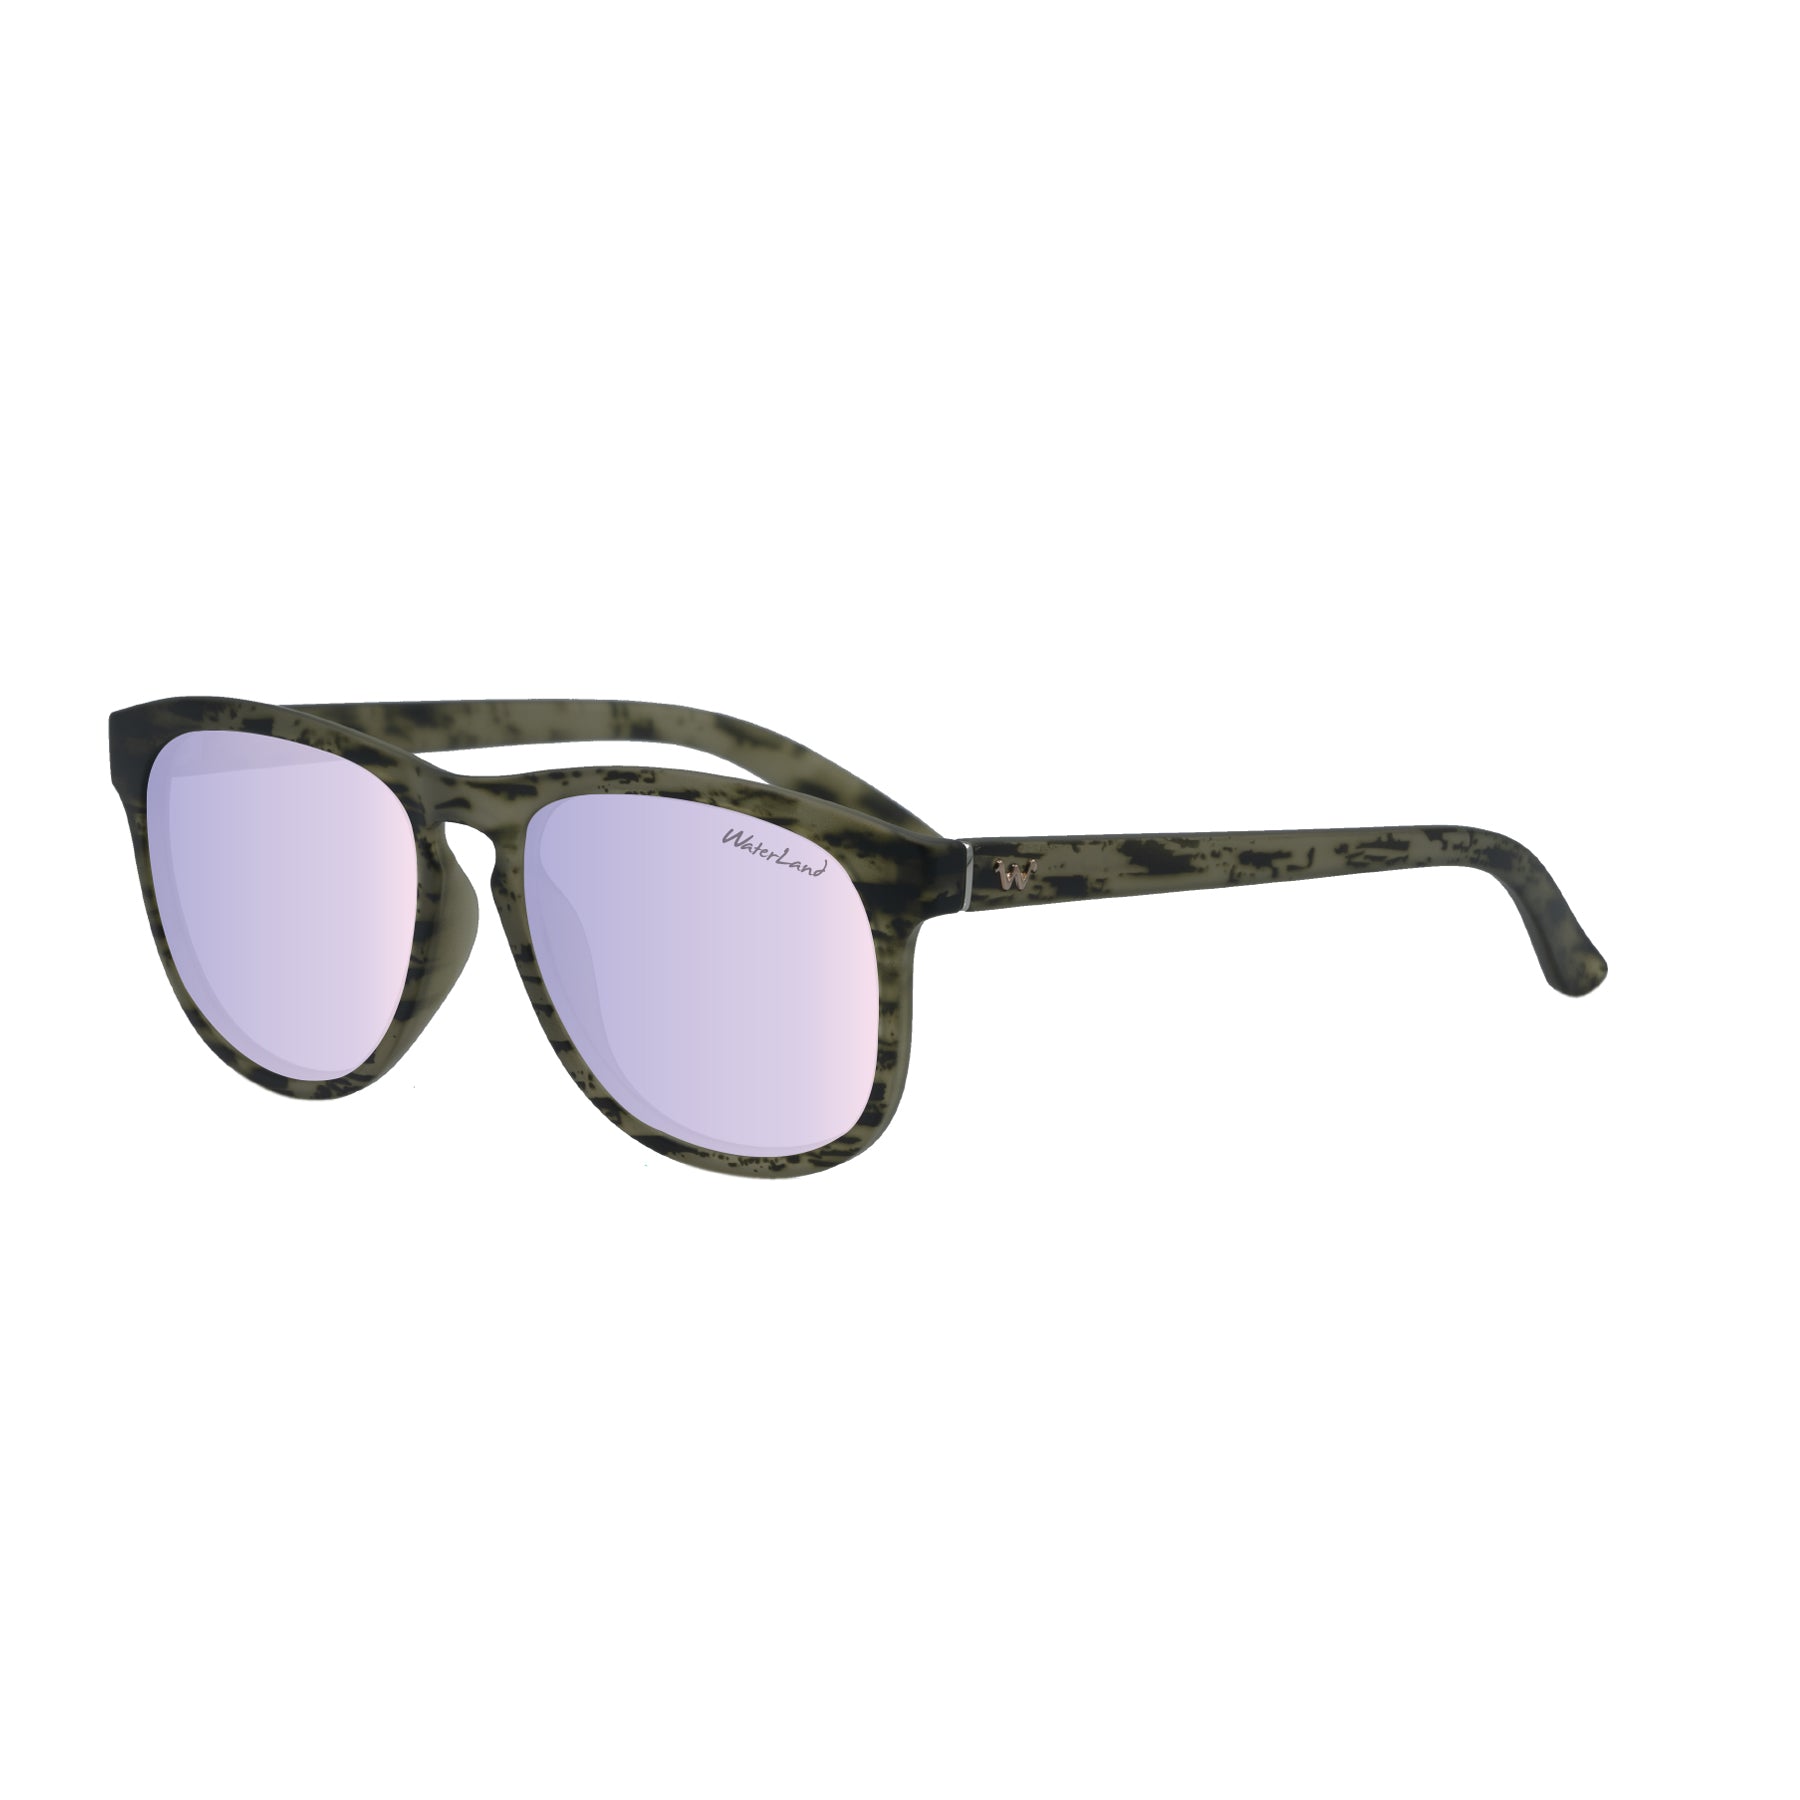 WaterLand Polarized Sunglasses - Milliken - WaterWood